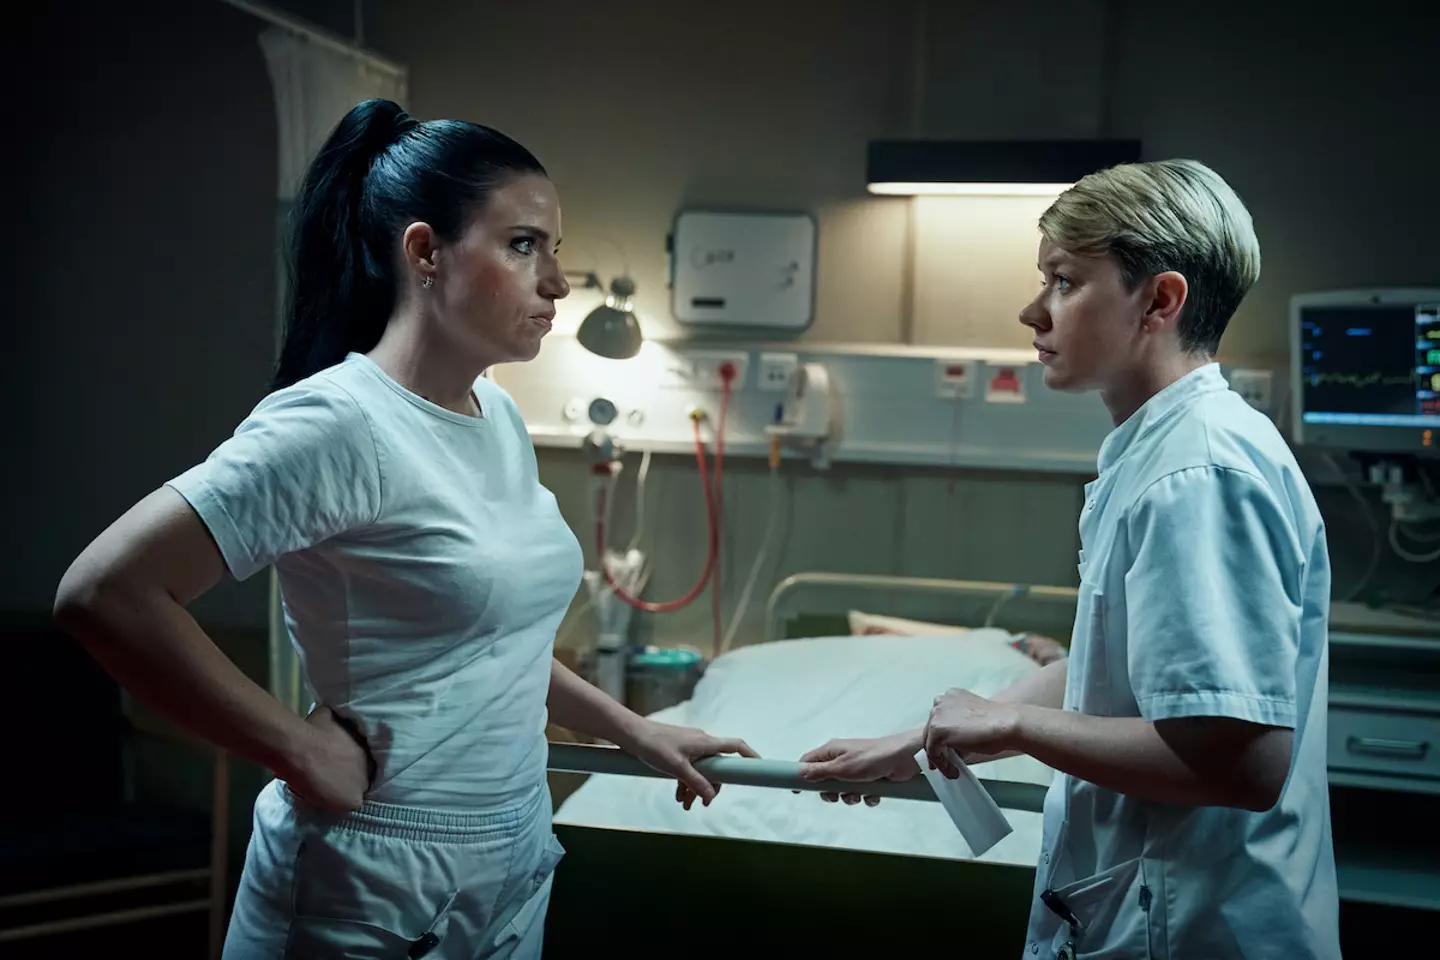 Josephine Park as Christina Aistrup Hansen and Fanny Louise Bernth as Pernille Kurzmann in The Nurse.